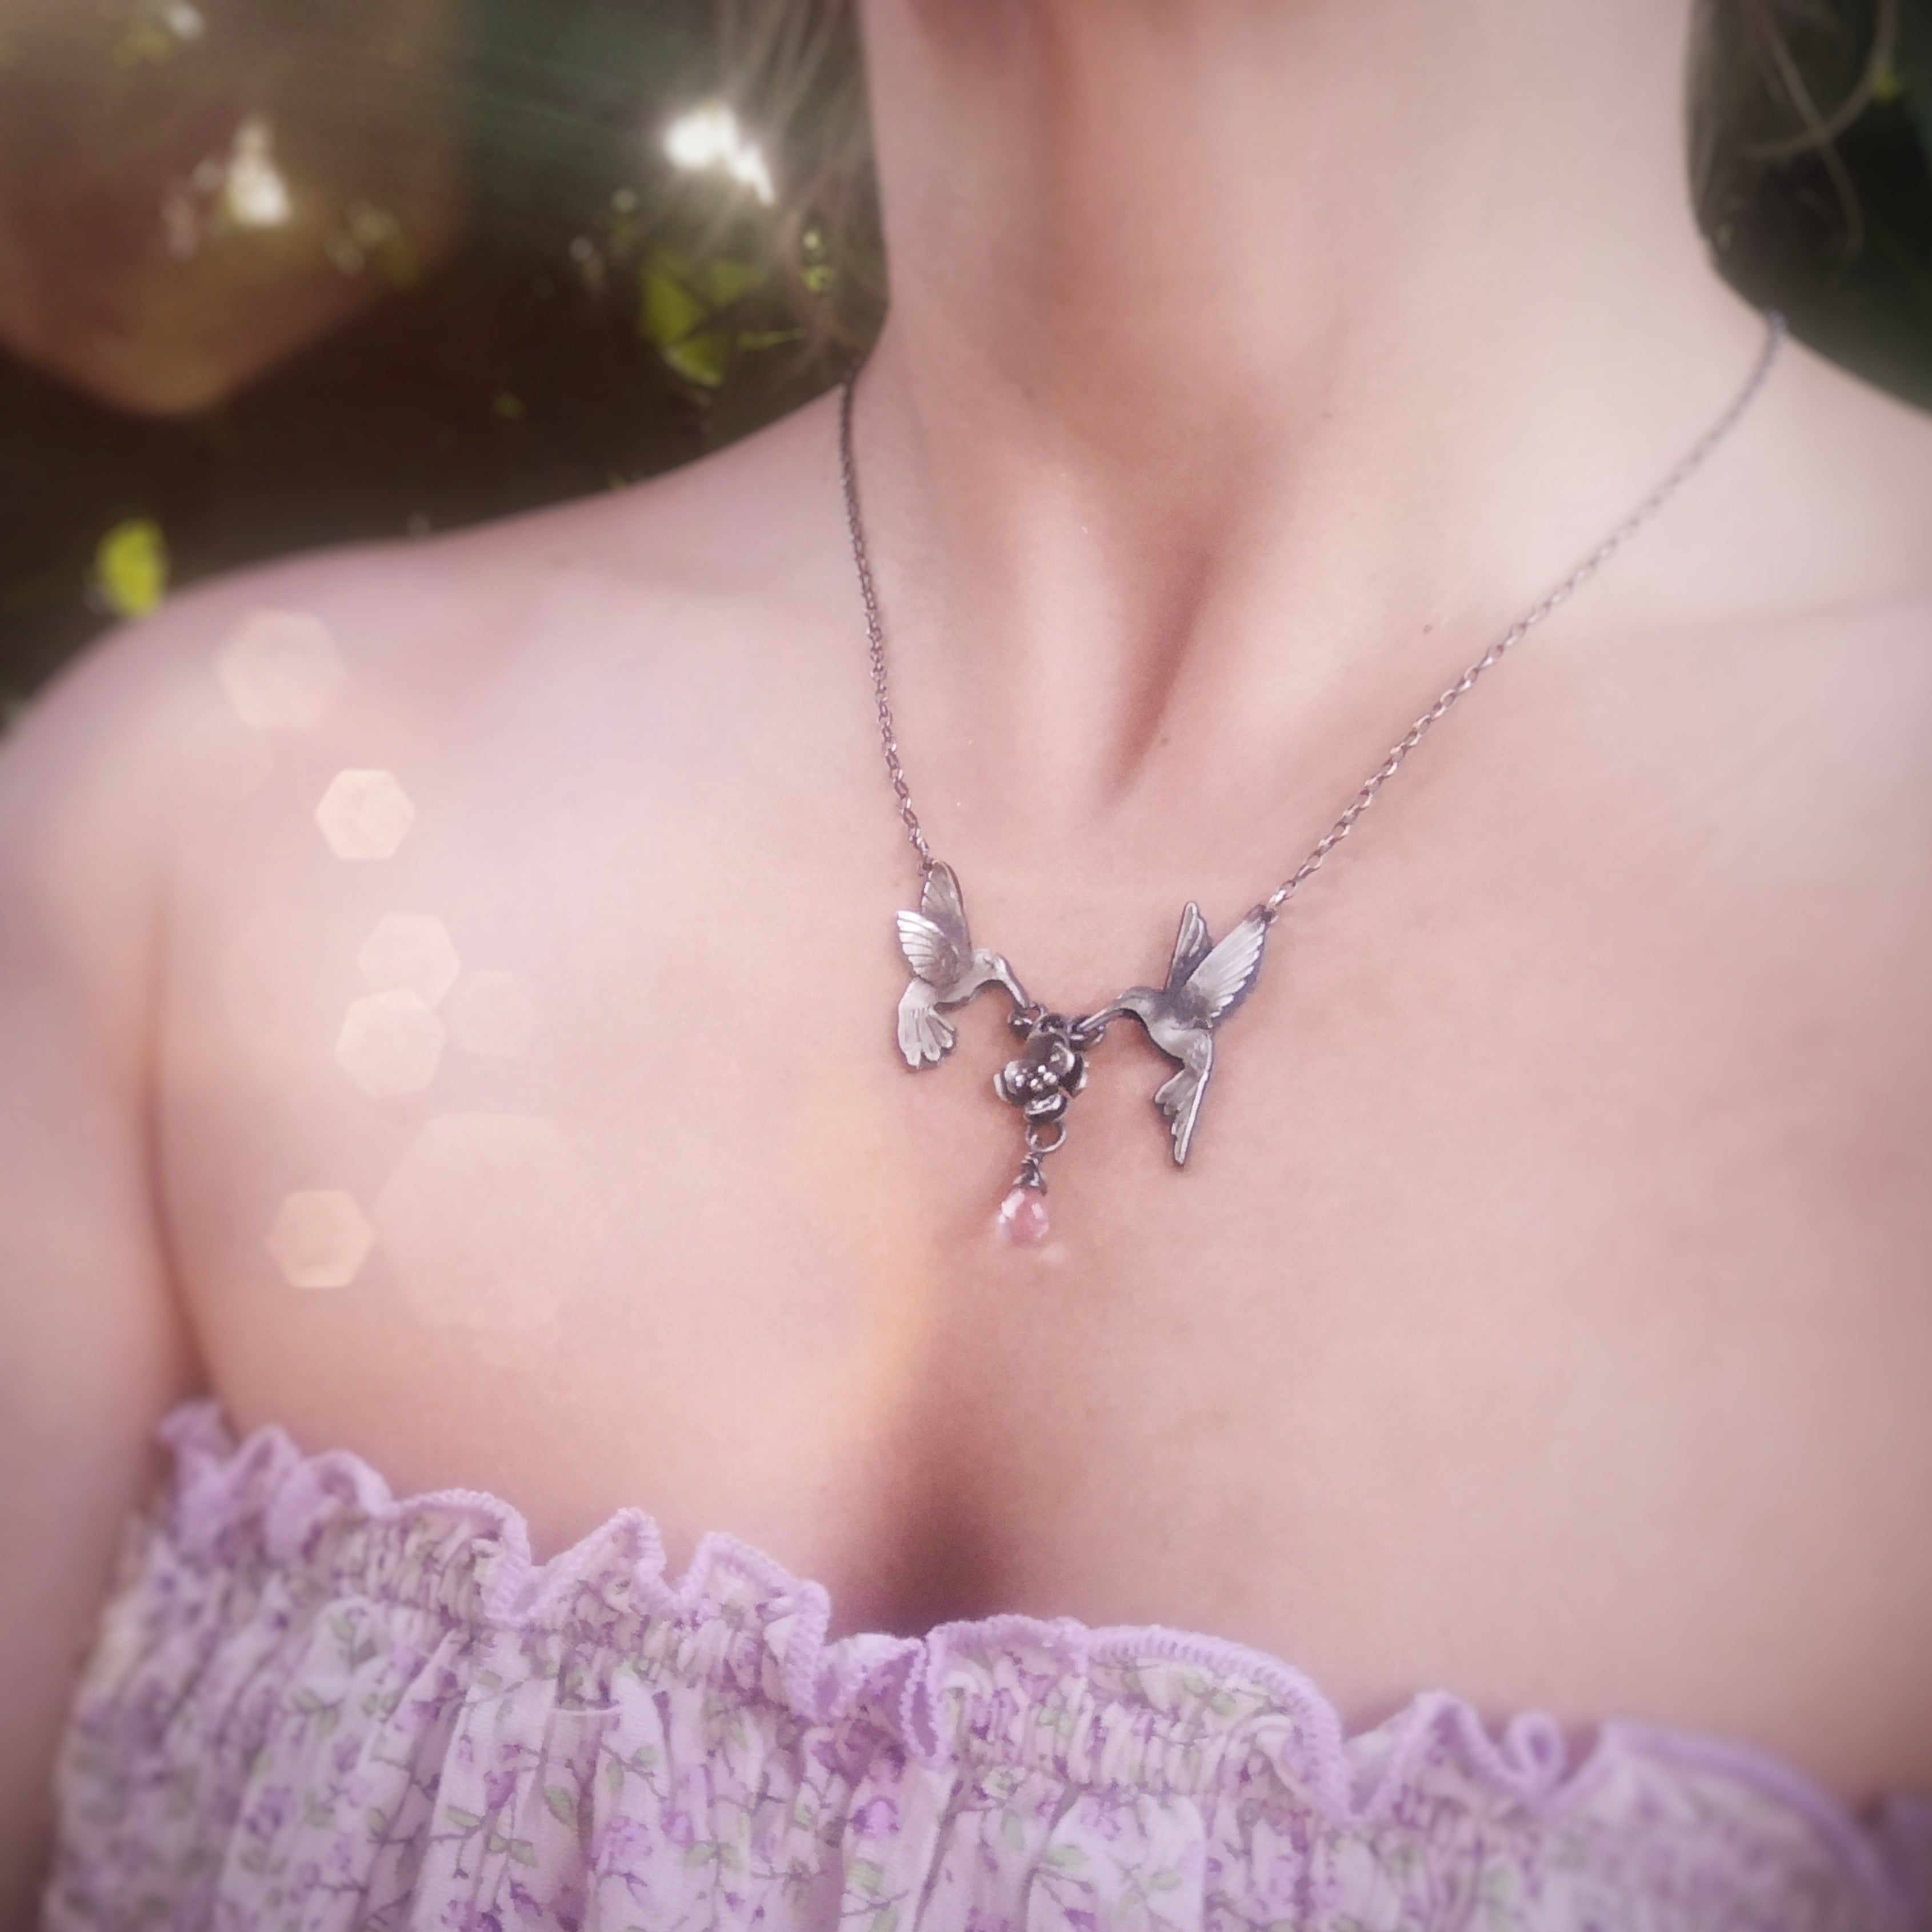 The Loving Hummingbirds Necklace